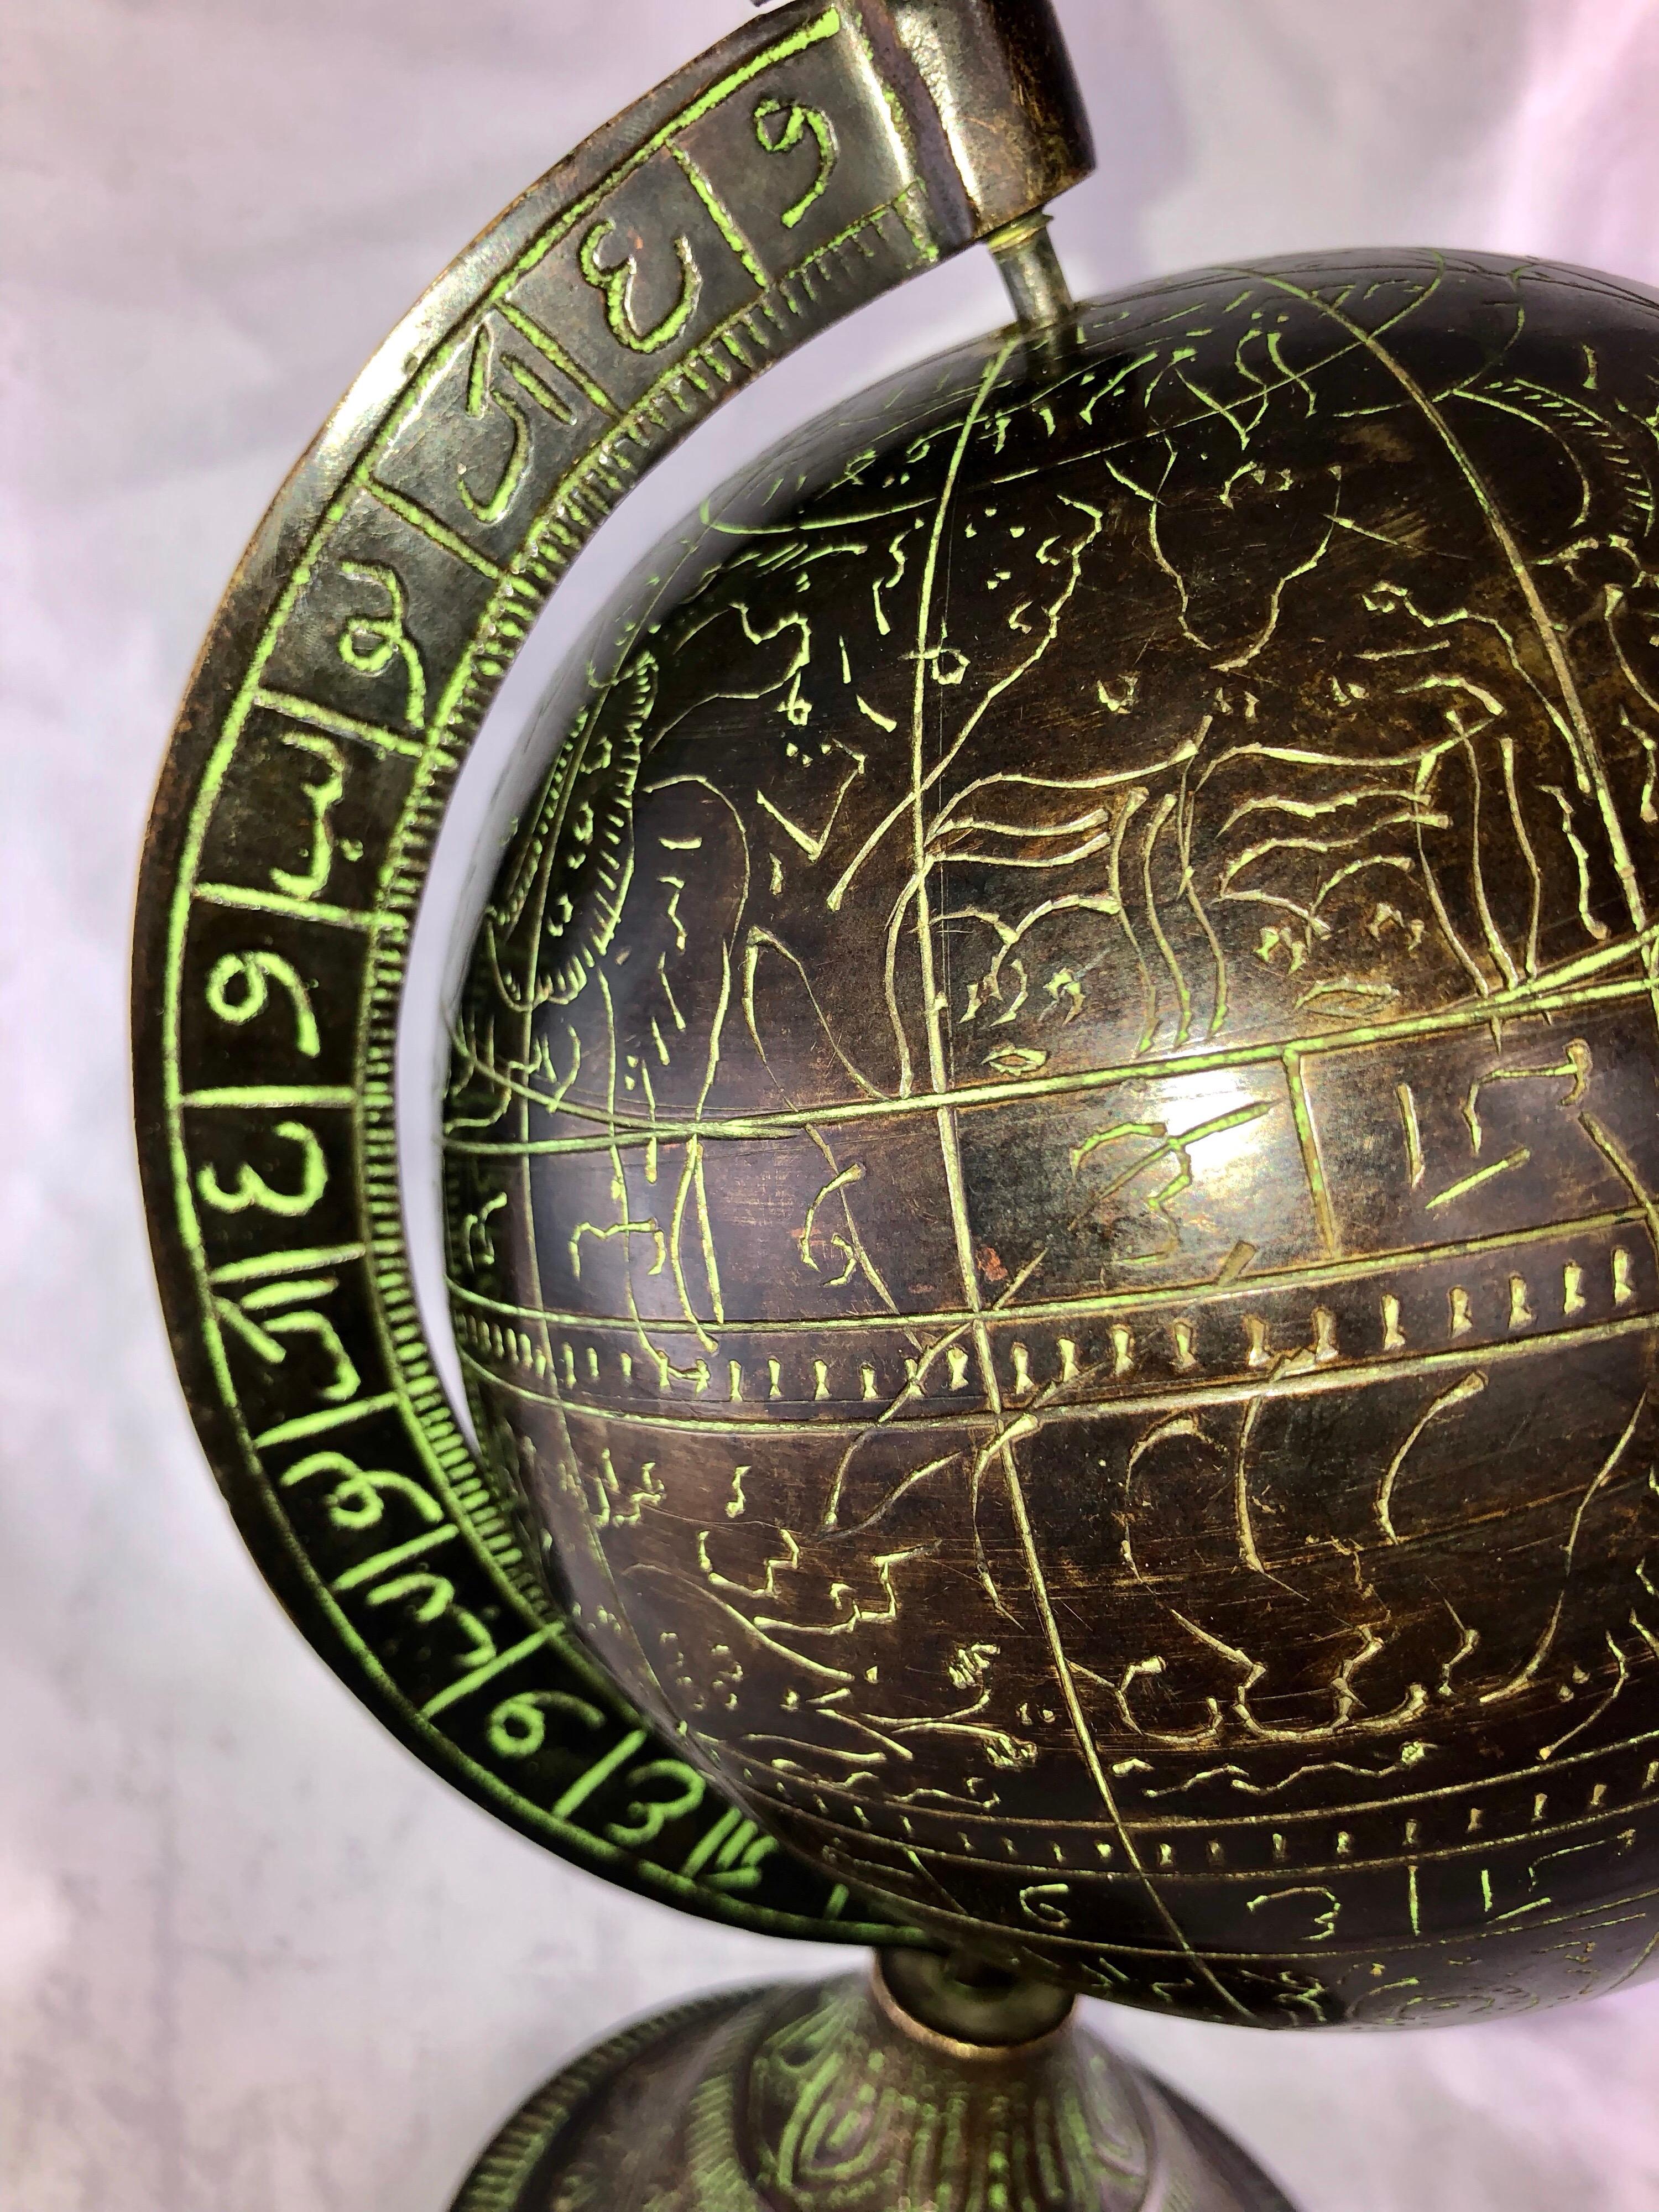 islamic celestial globe